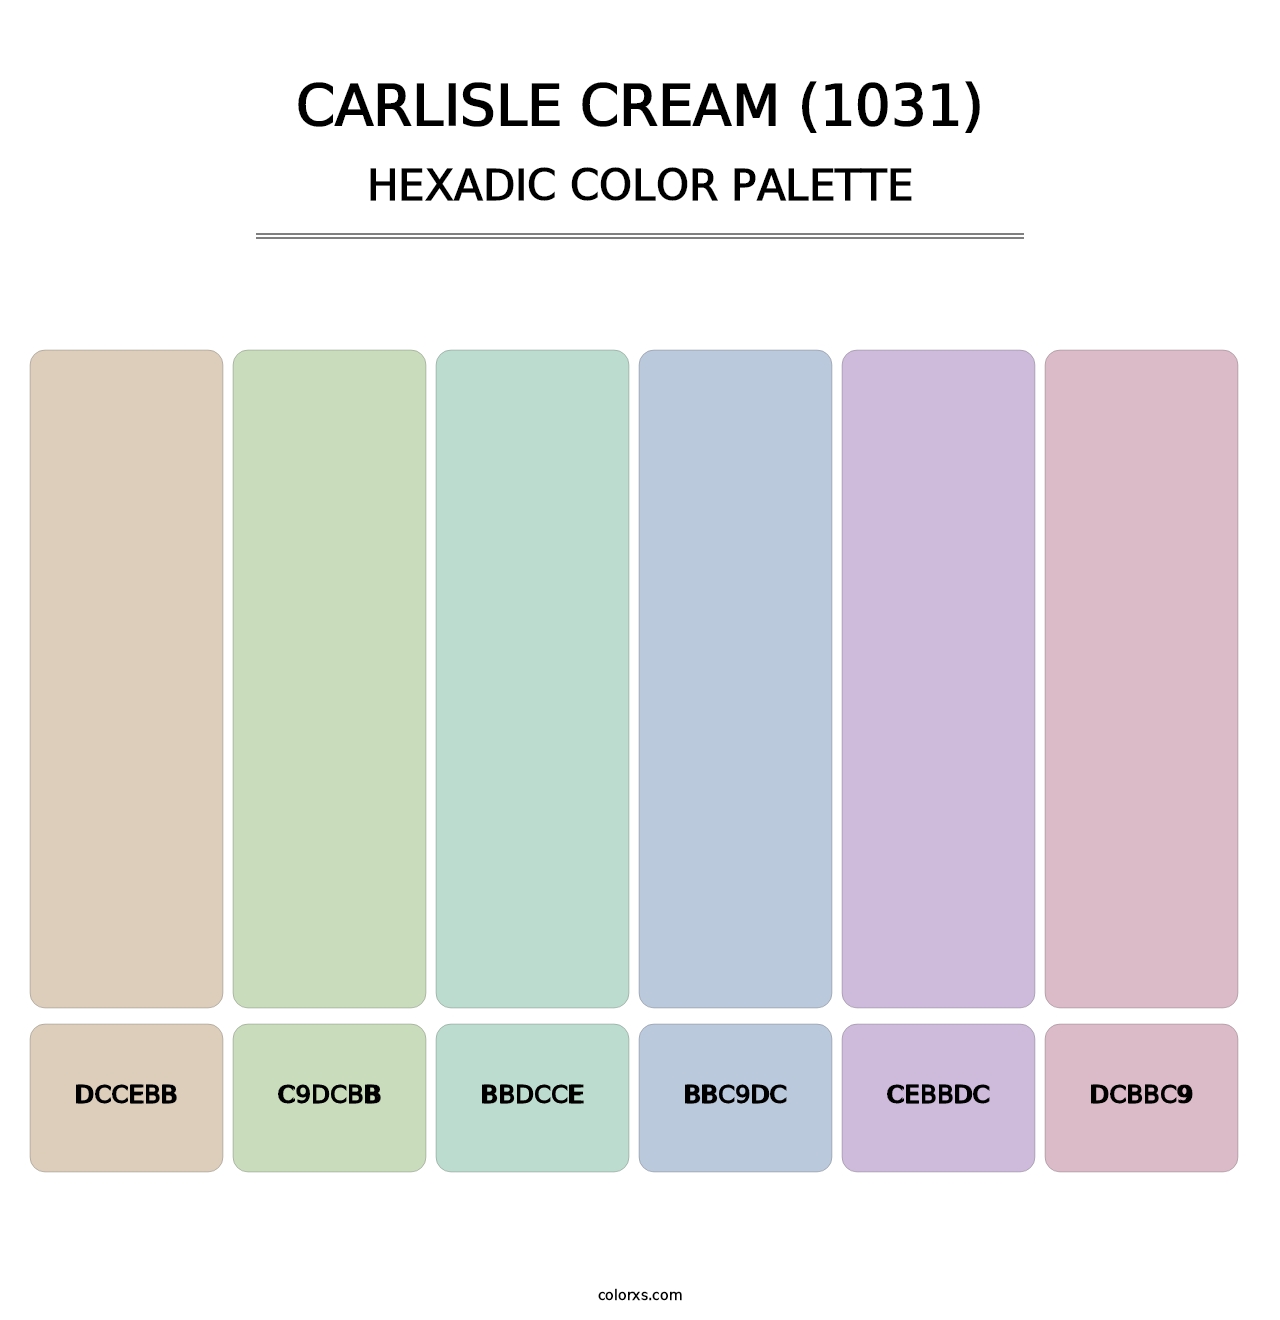 Carlisle Cream (1031) - Hexadic Color Palette